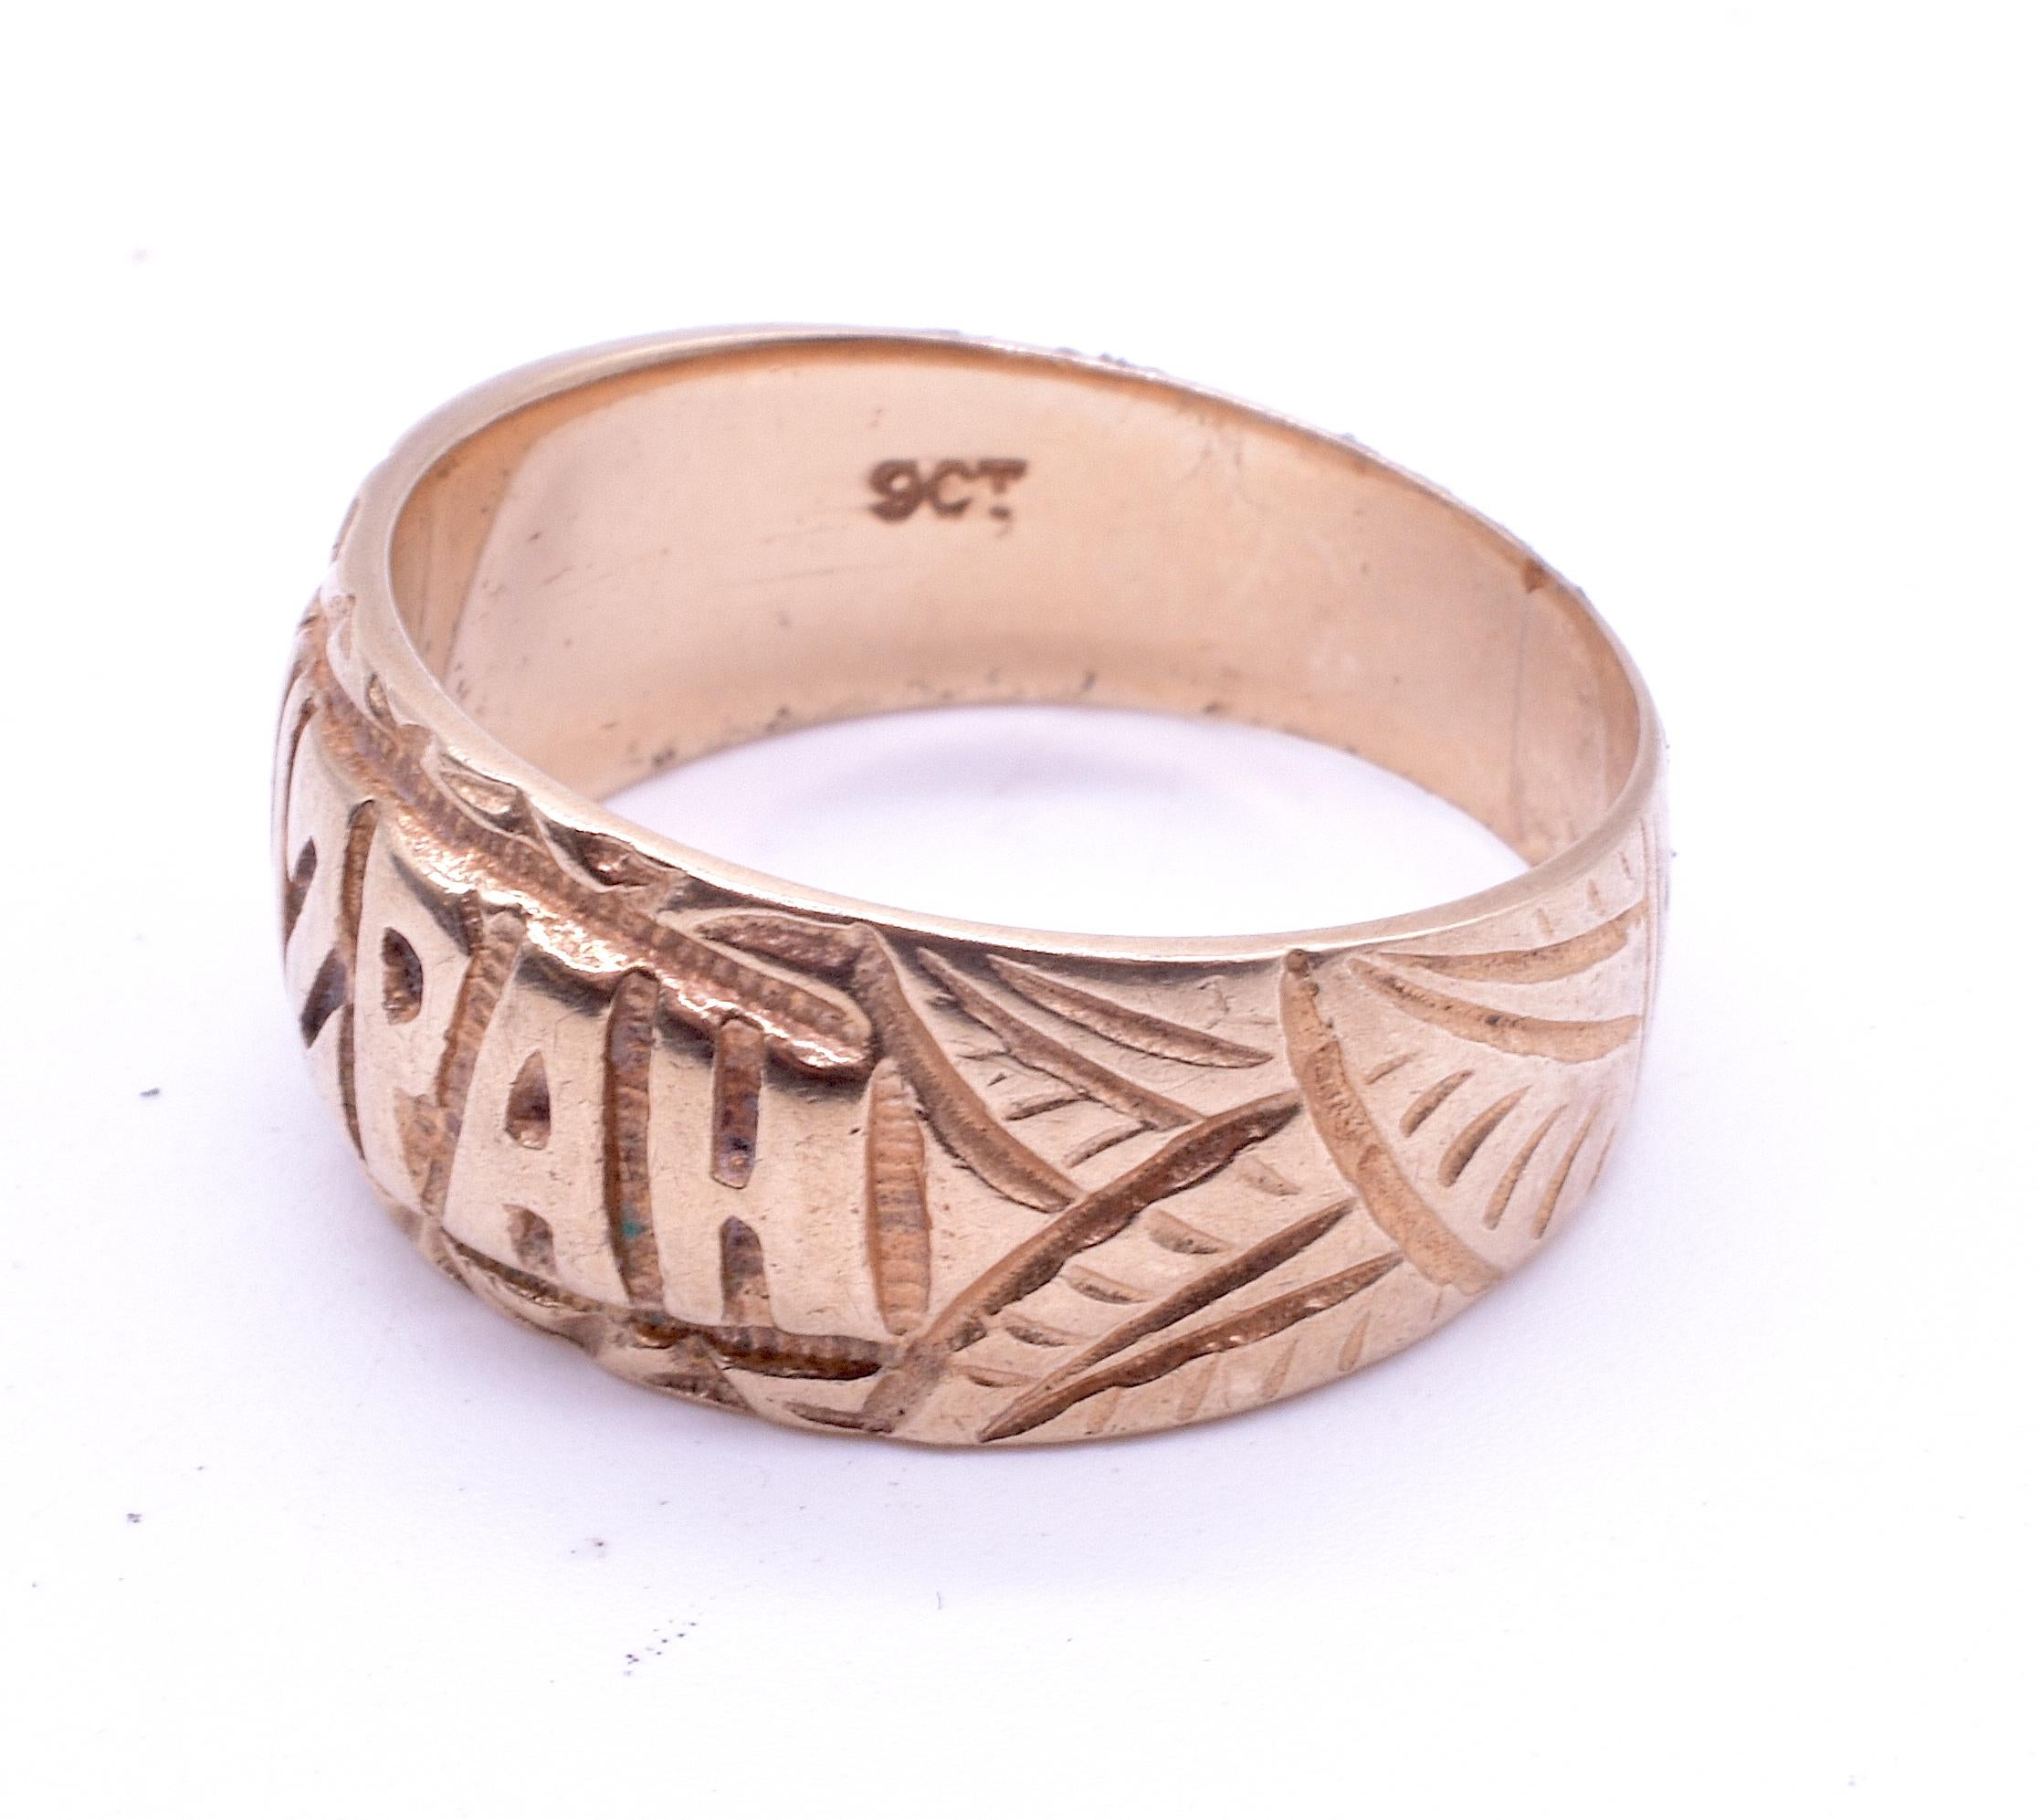 mizpah ring meaning